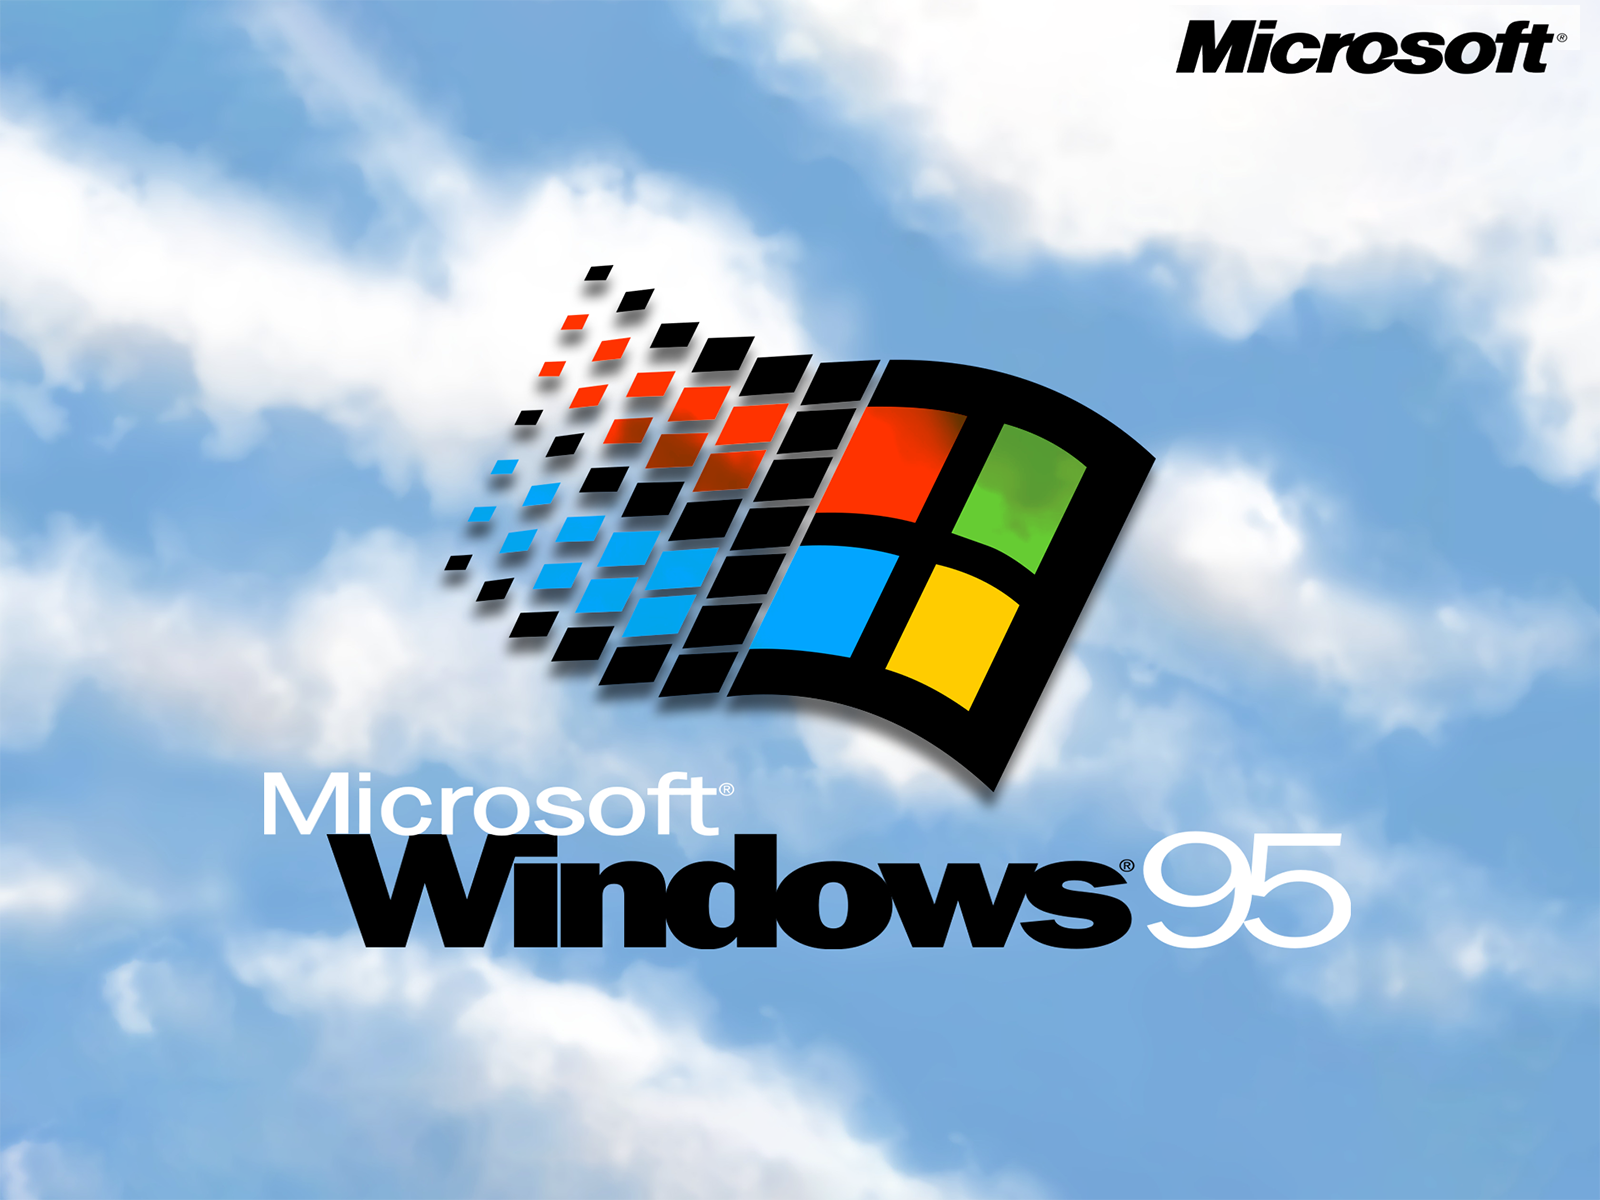 Фон windows 95